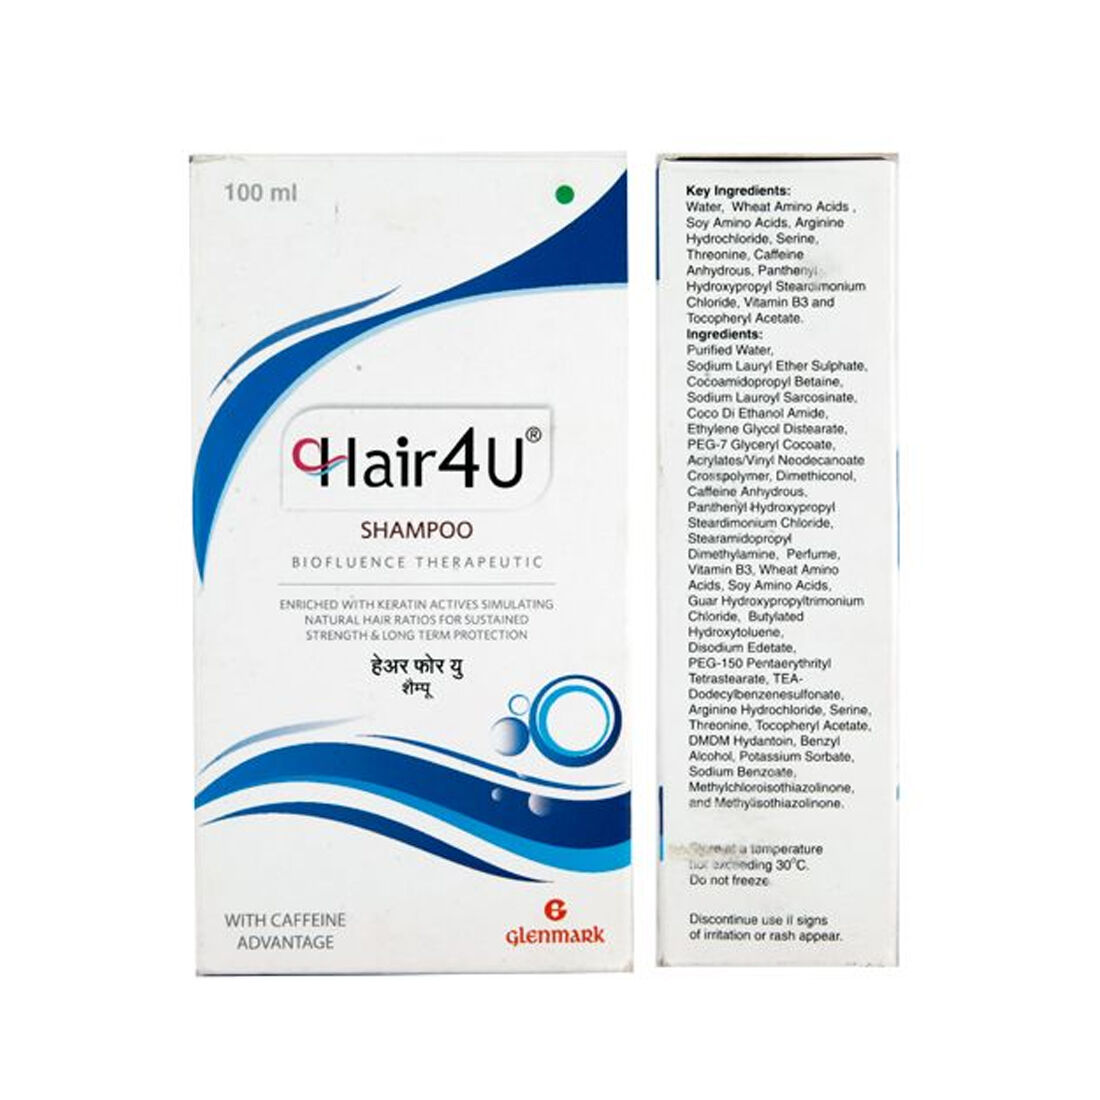 Hair 4U Shampoo | Dermal Shop | Order Now